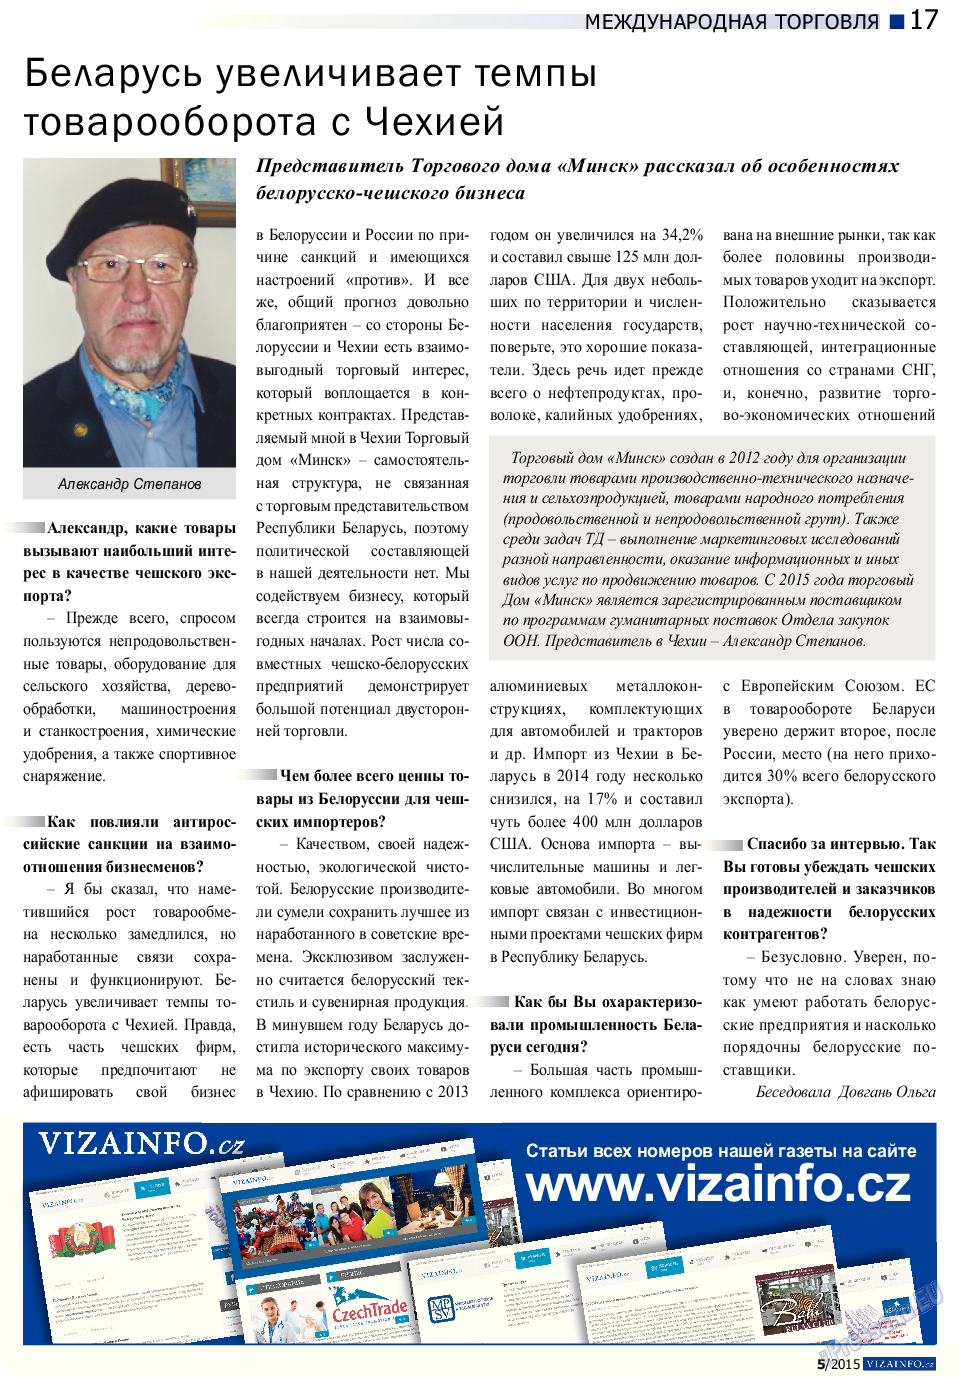 Vizainfo.cz, газета. 2015 №68 стр.17